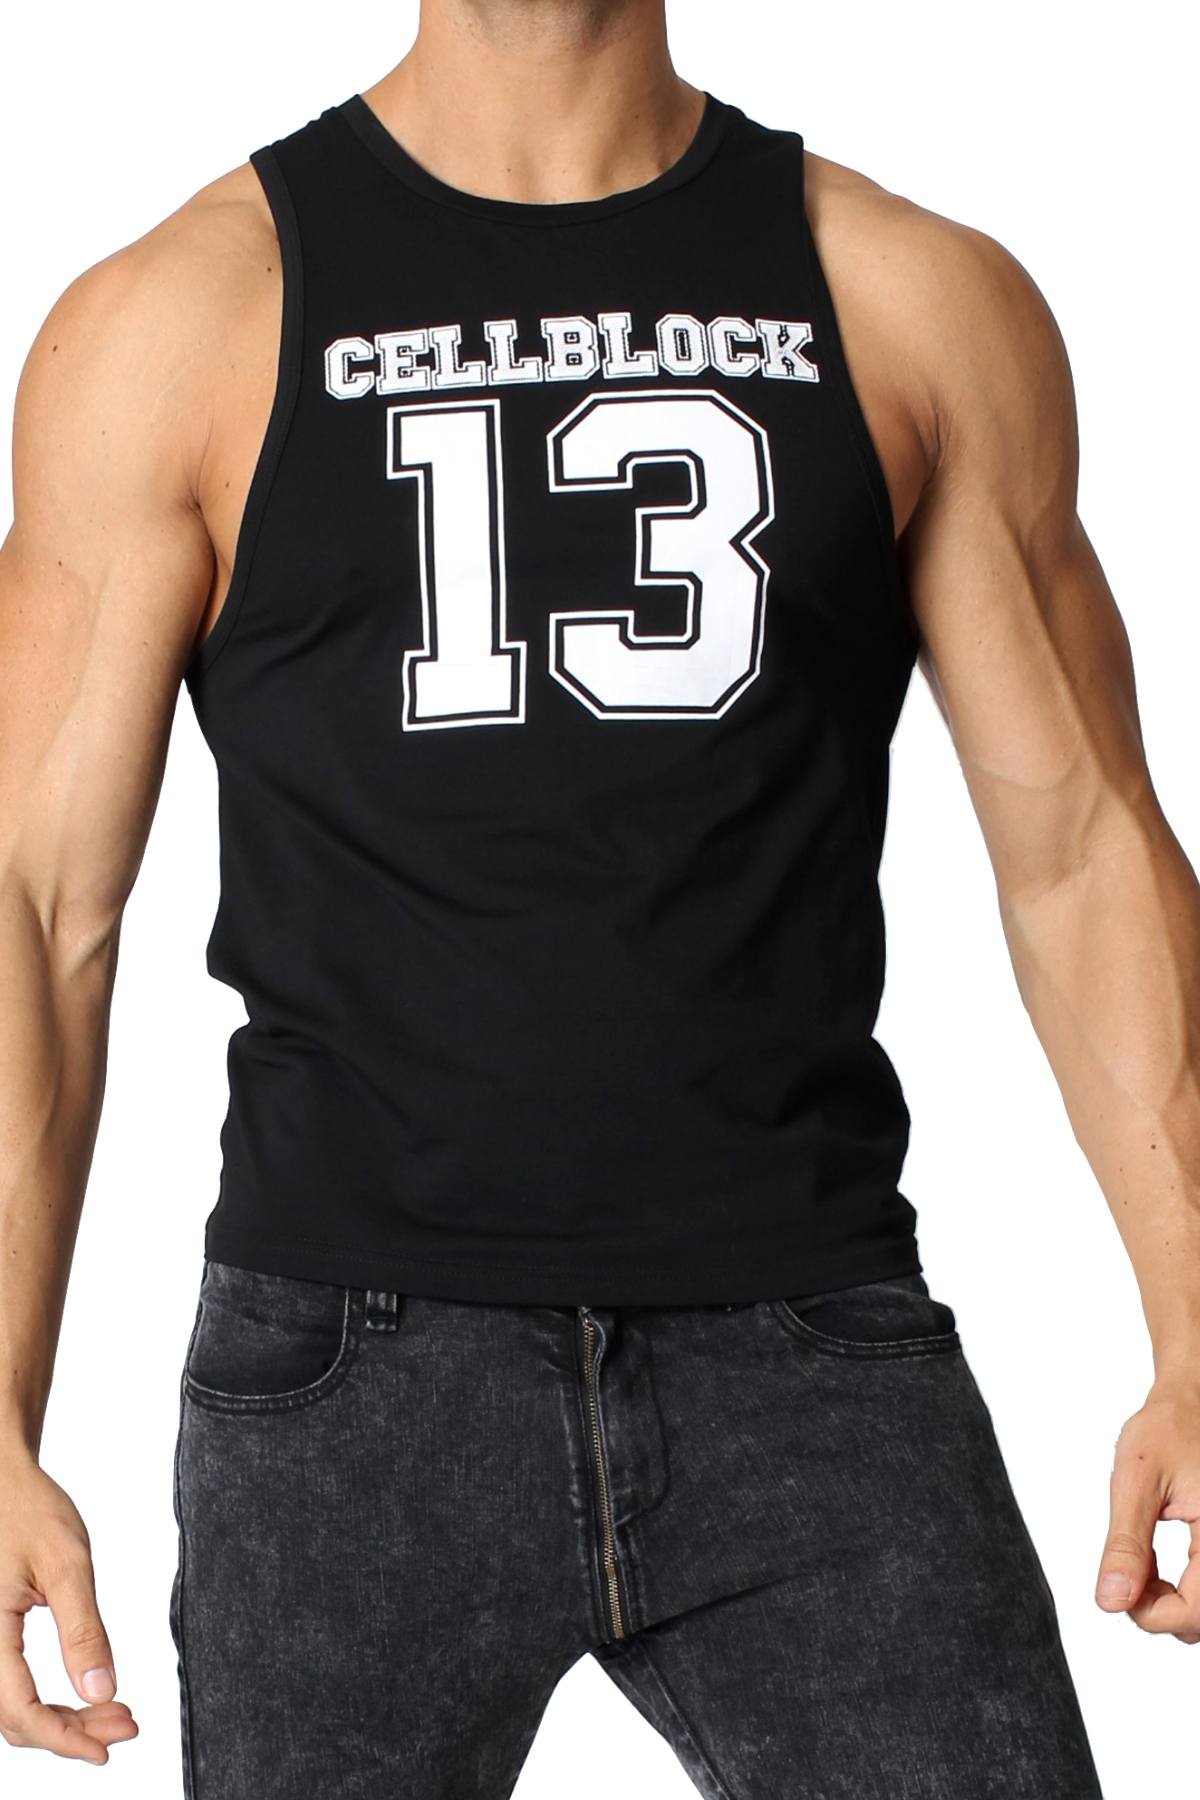 CellBlock 13 Black Stadium Tank